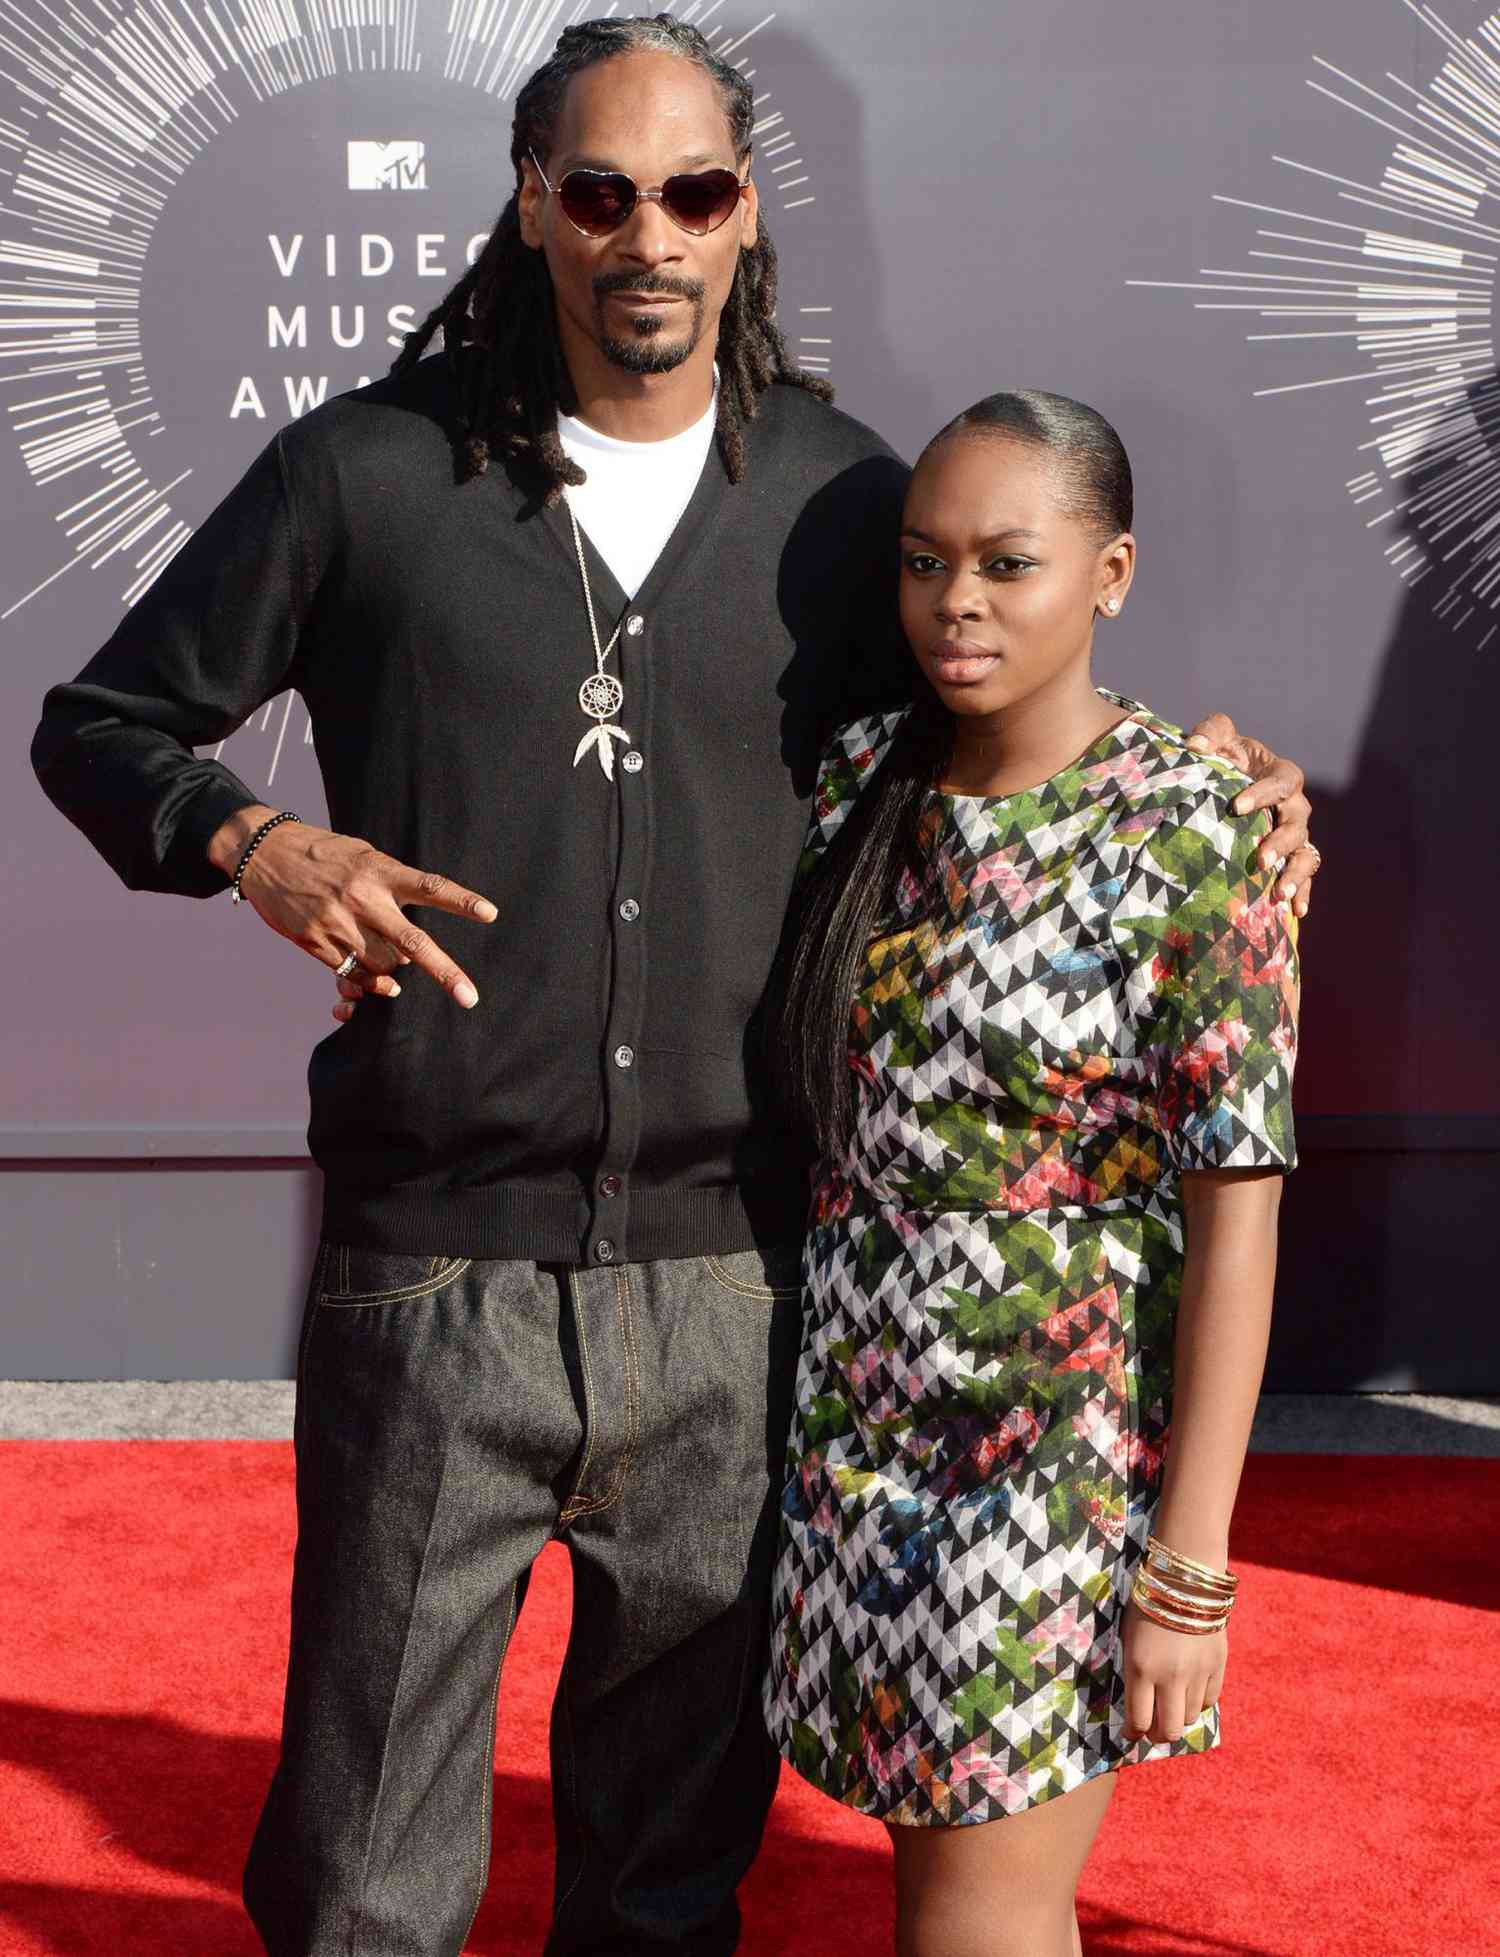 Snoop Dogg Filha do Cori Fala de Saúde Mental Após a Tentativa de Suicídio: 'Agradecemos Sua Vida'